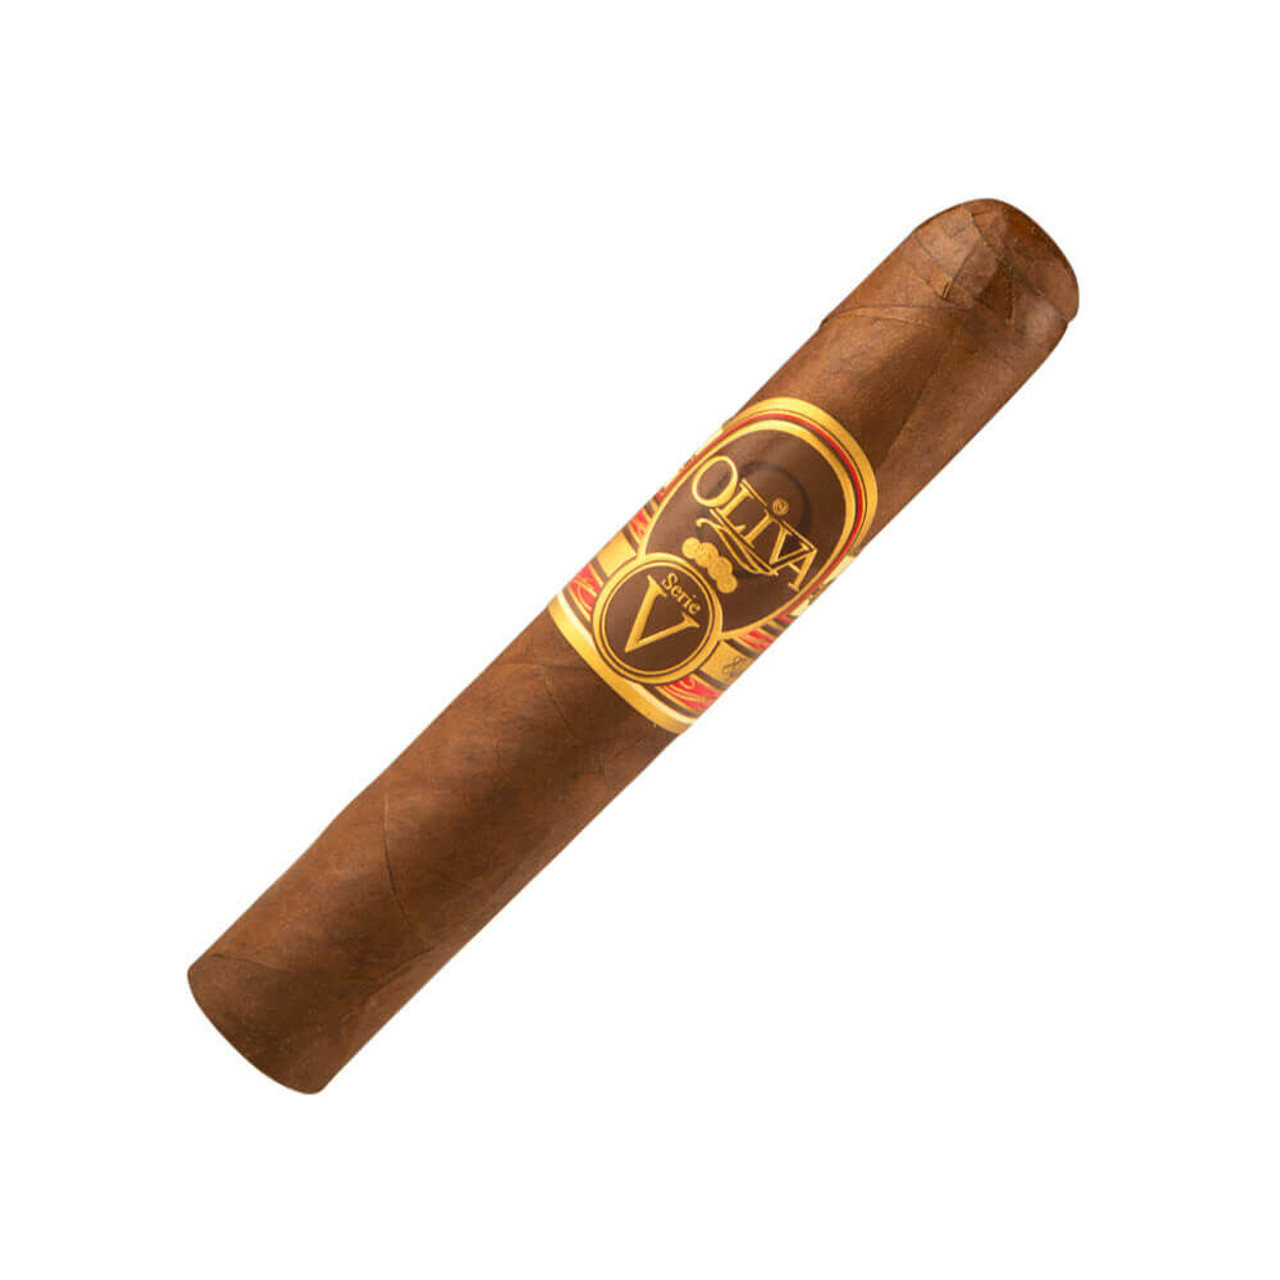 Oliva Serie V Double Robusto Cigars - 5 x 54 Single